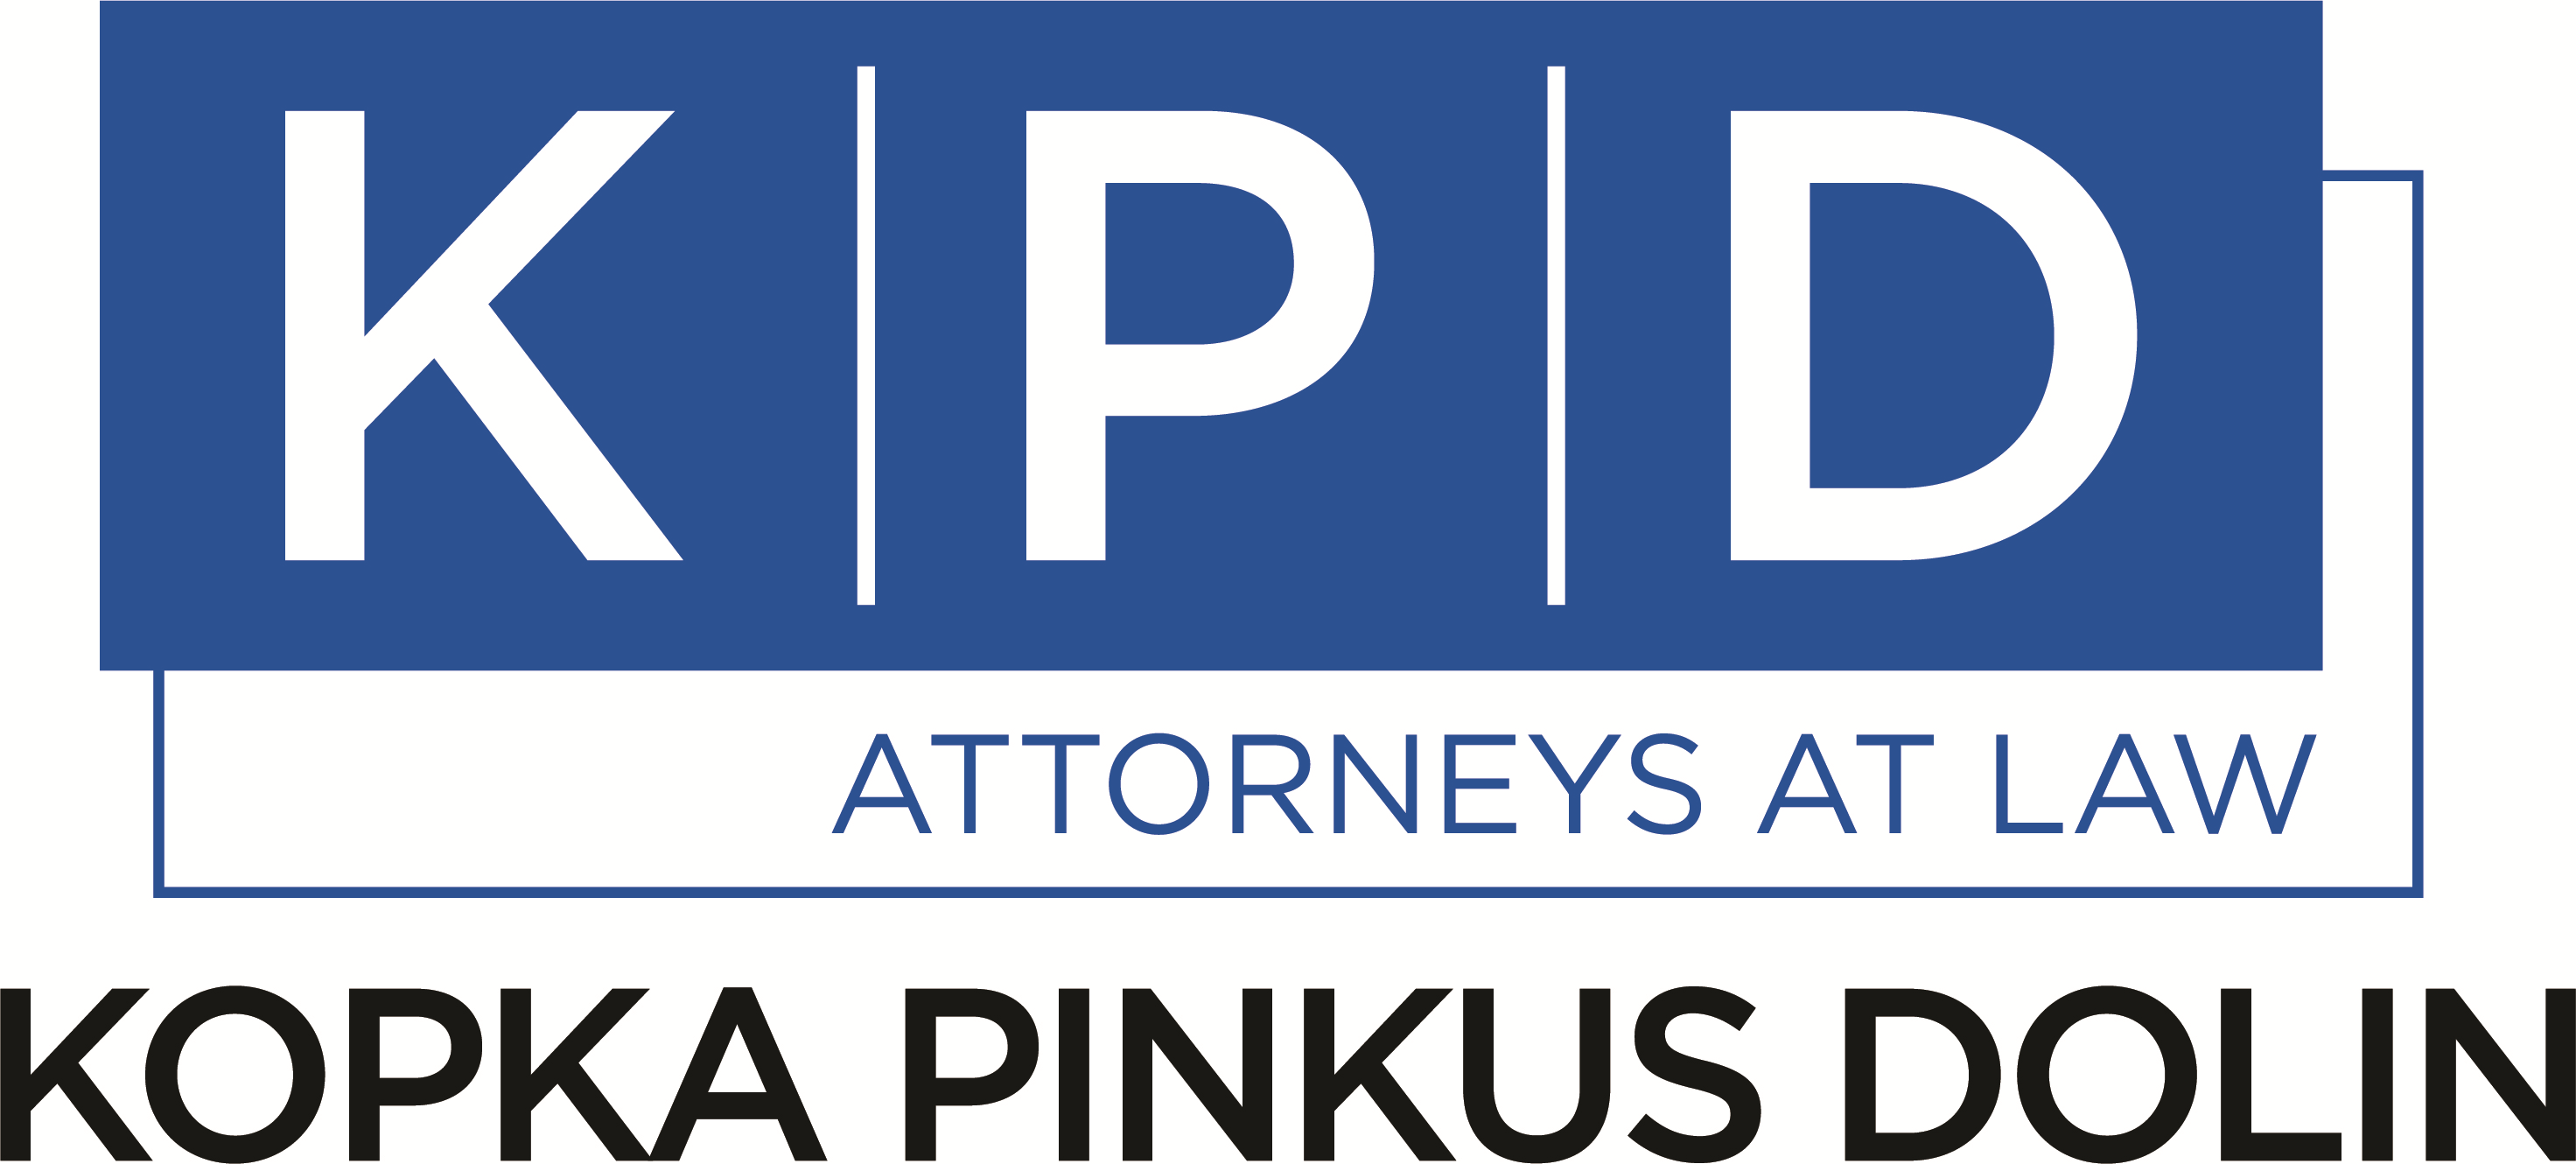 Kopka Pinkus Dolin PC Company Logo